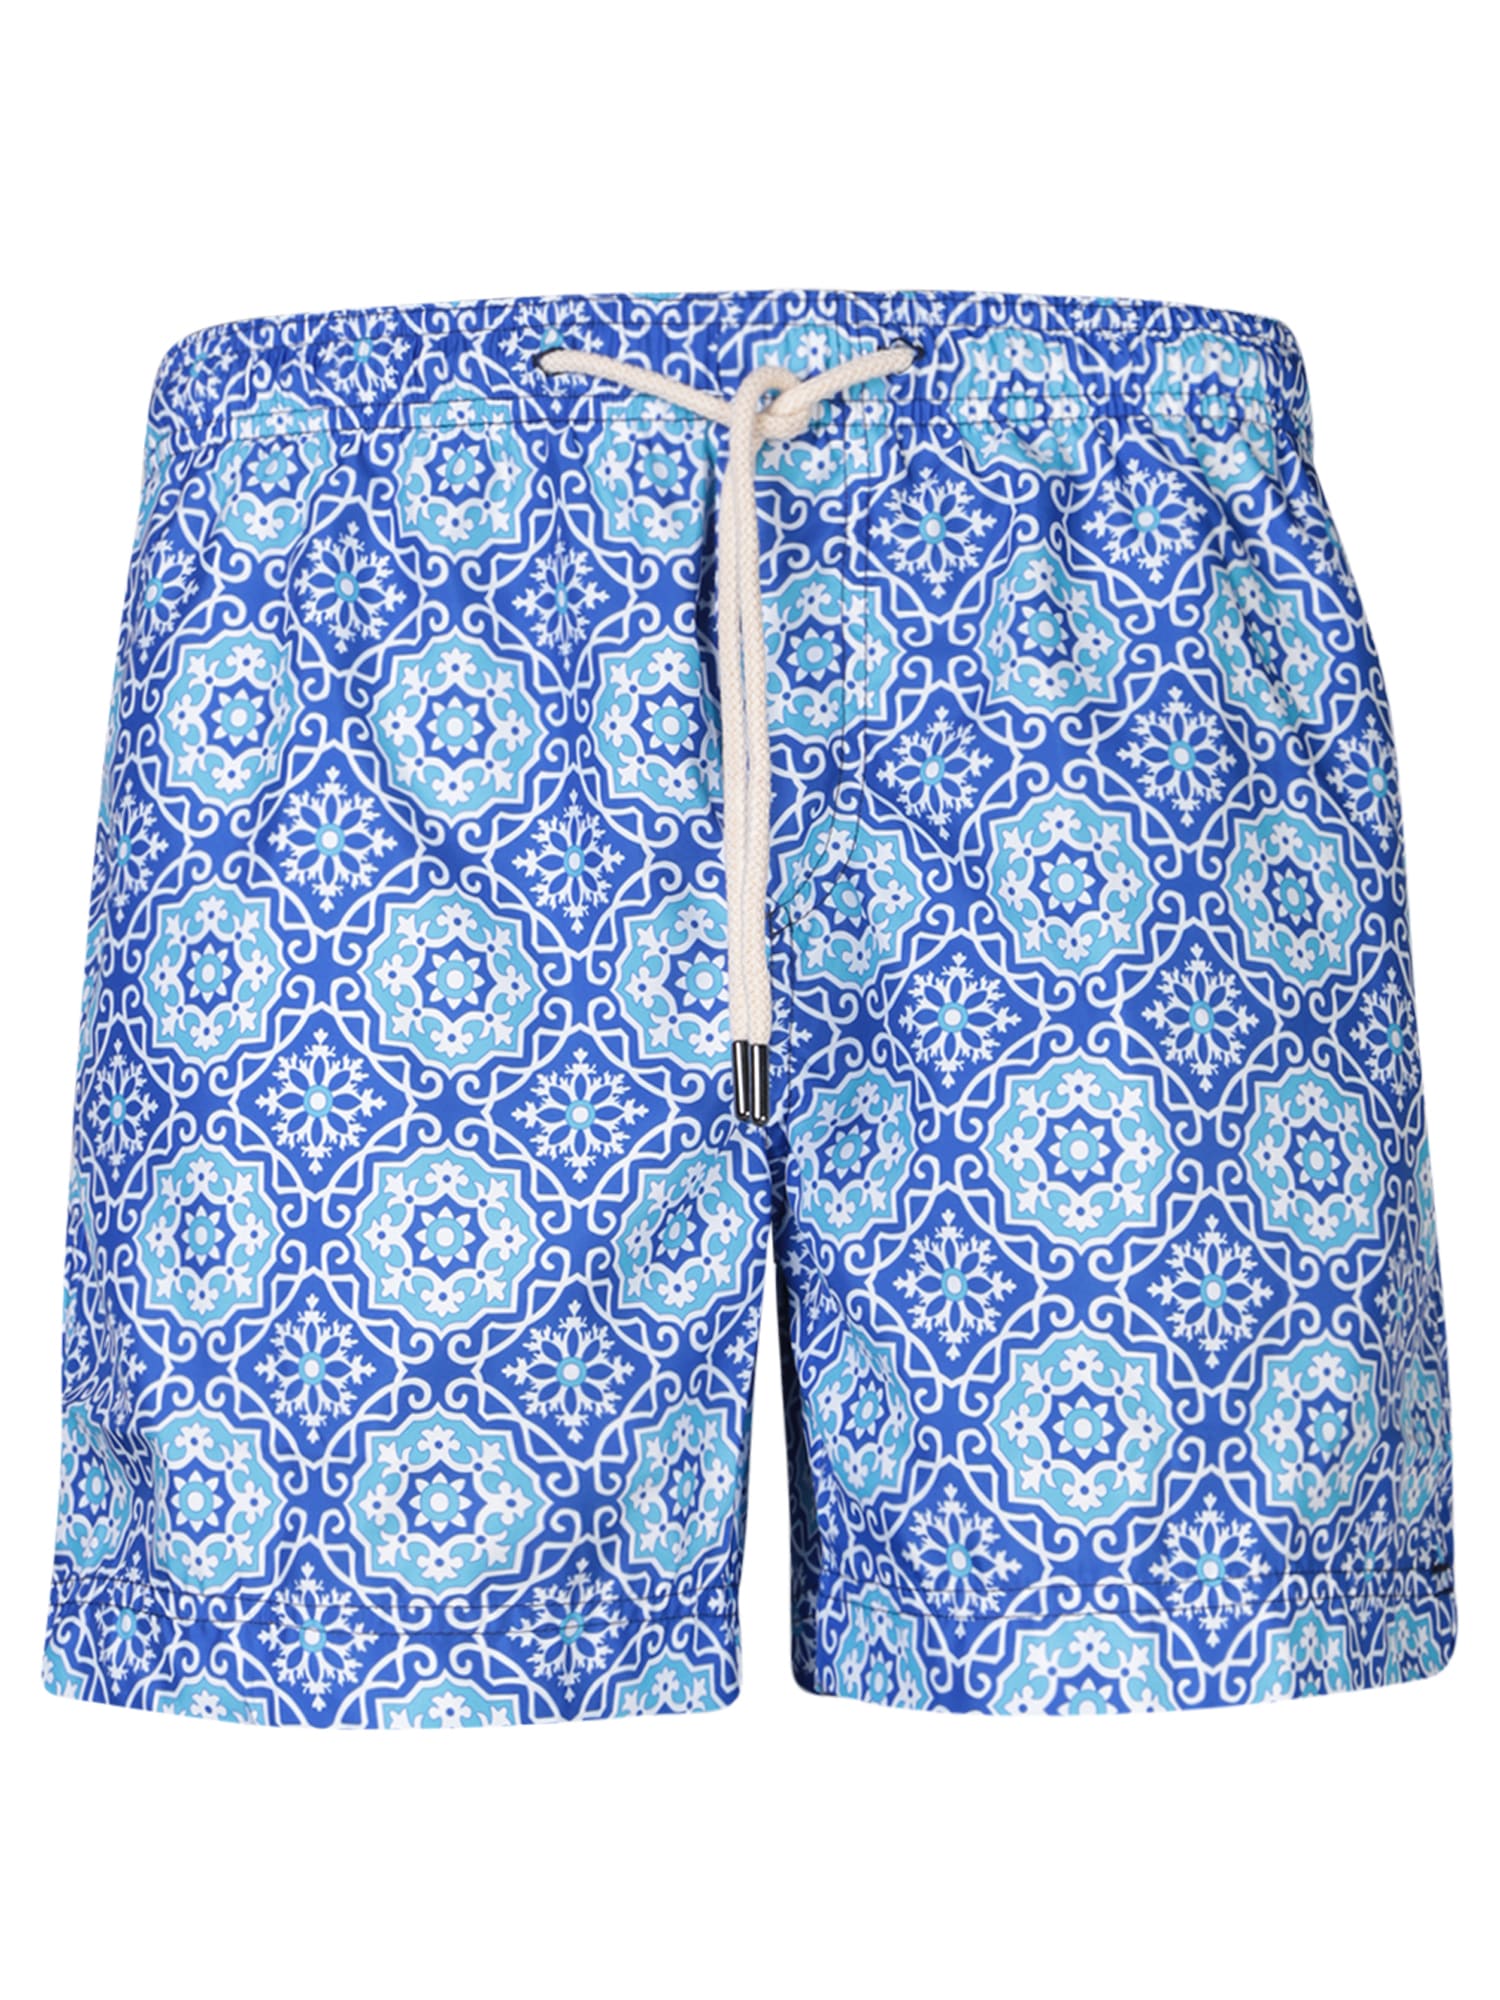 Patterned Blue Boxer Swim Shorts By Peninsula